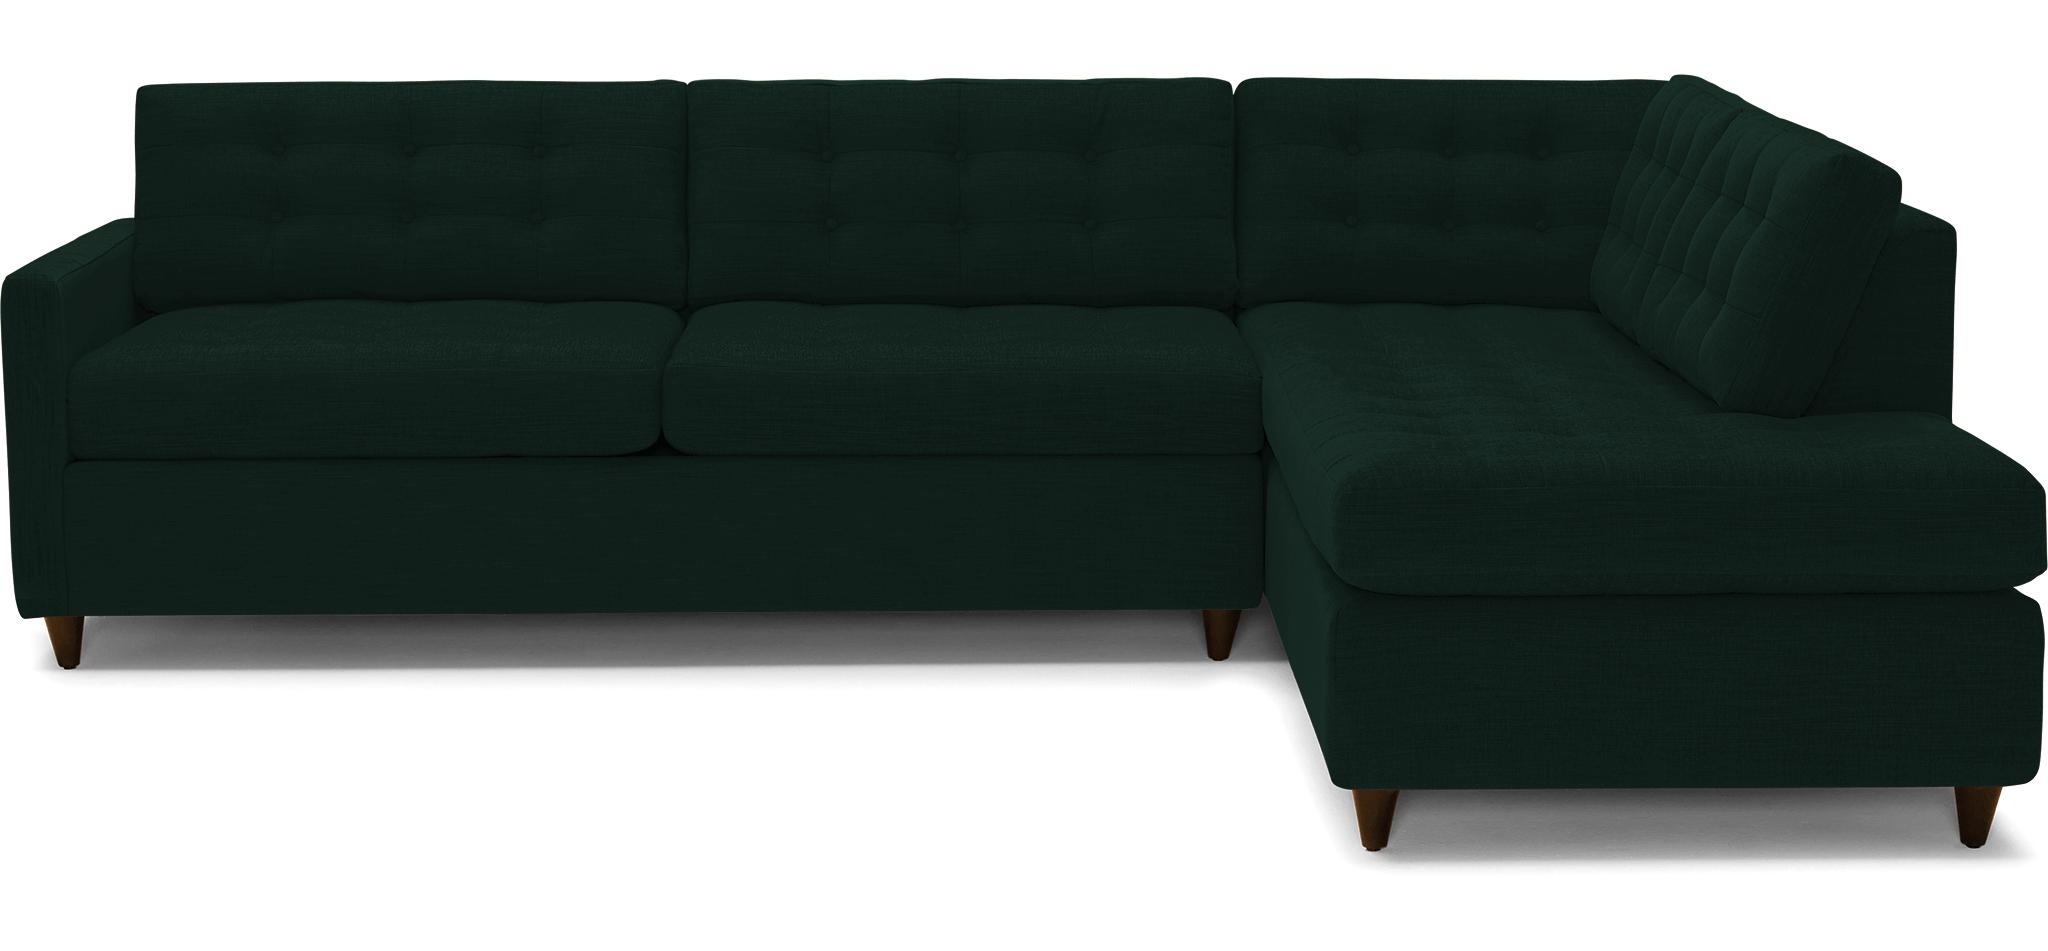 Green Eliot Mid Century Modern Bumper Sleeper Sectional - Royale Evergreen - Mocha - Left - Image 0